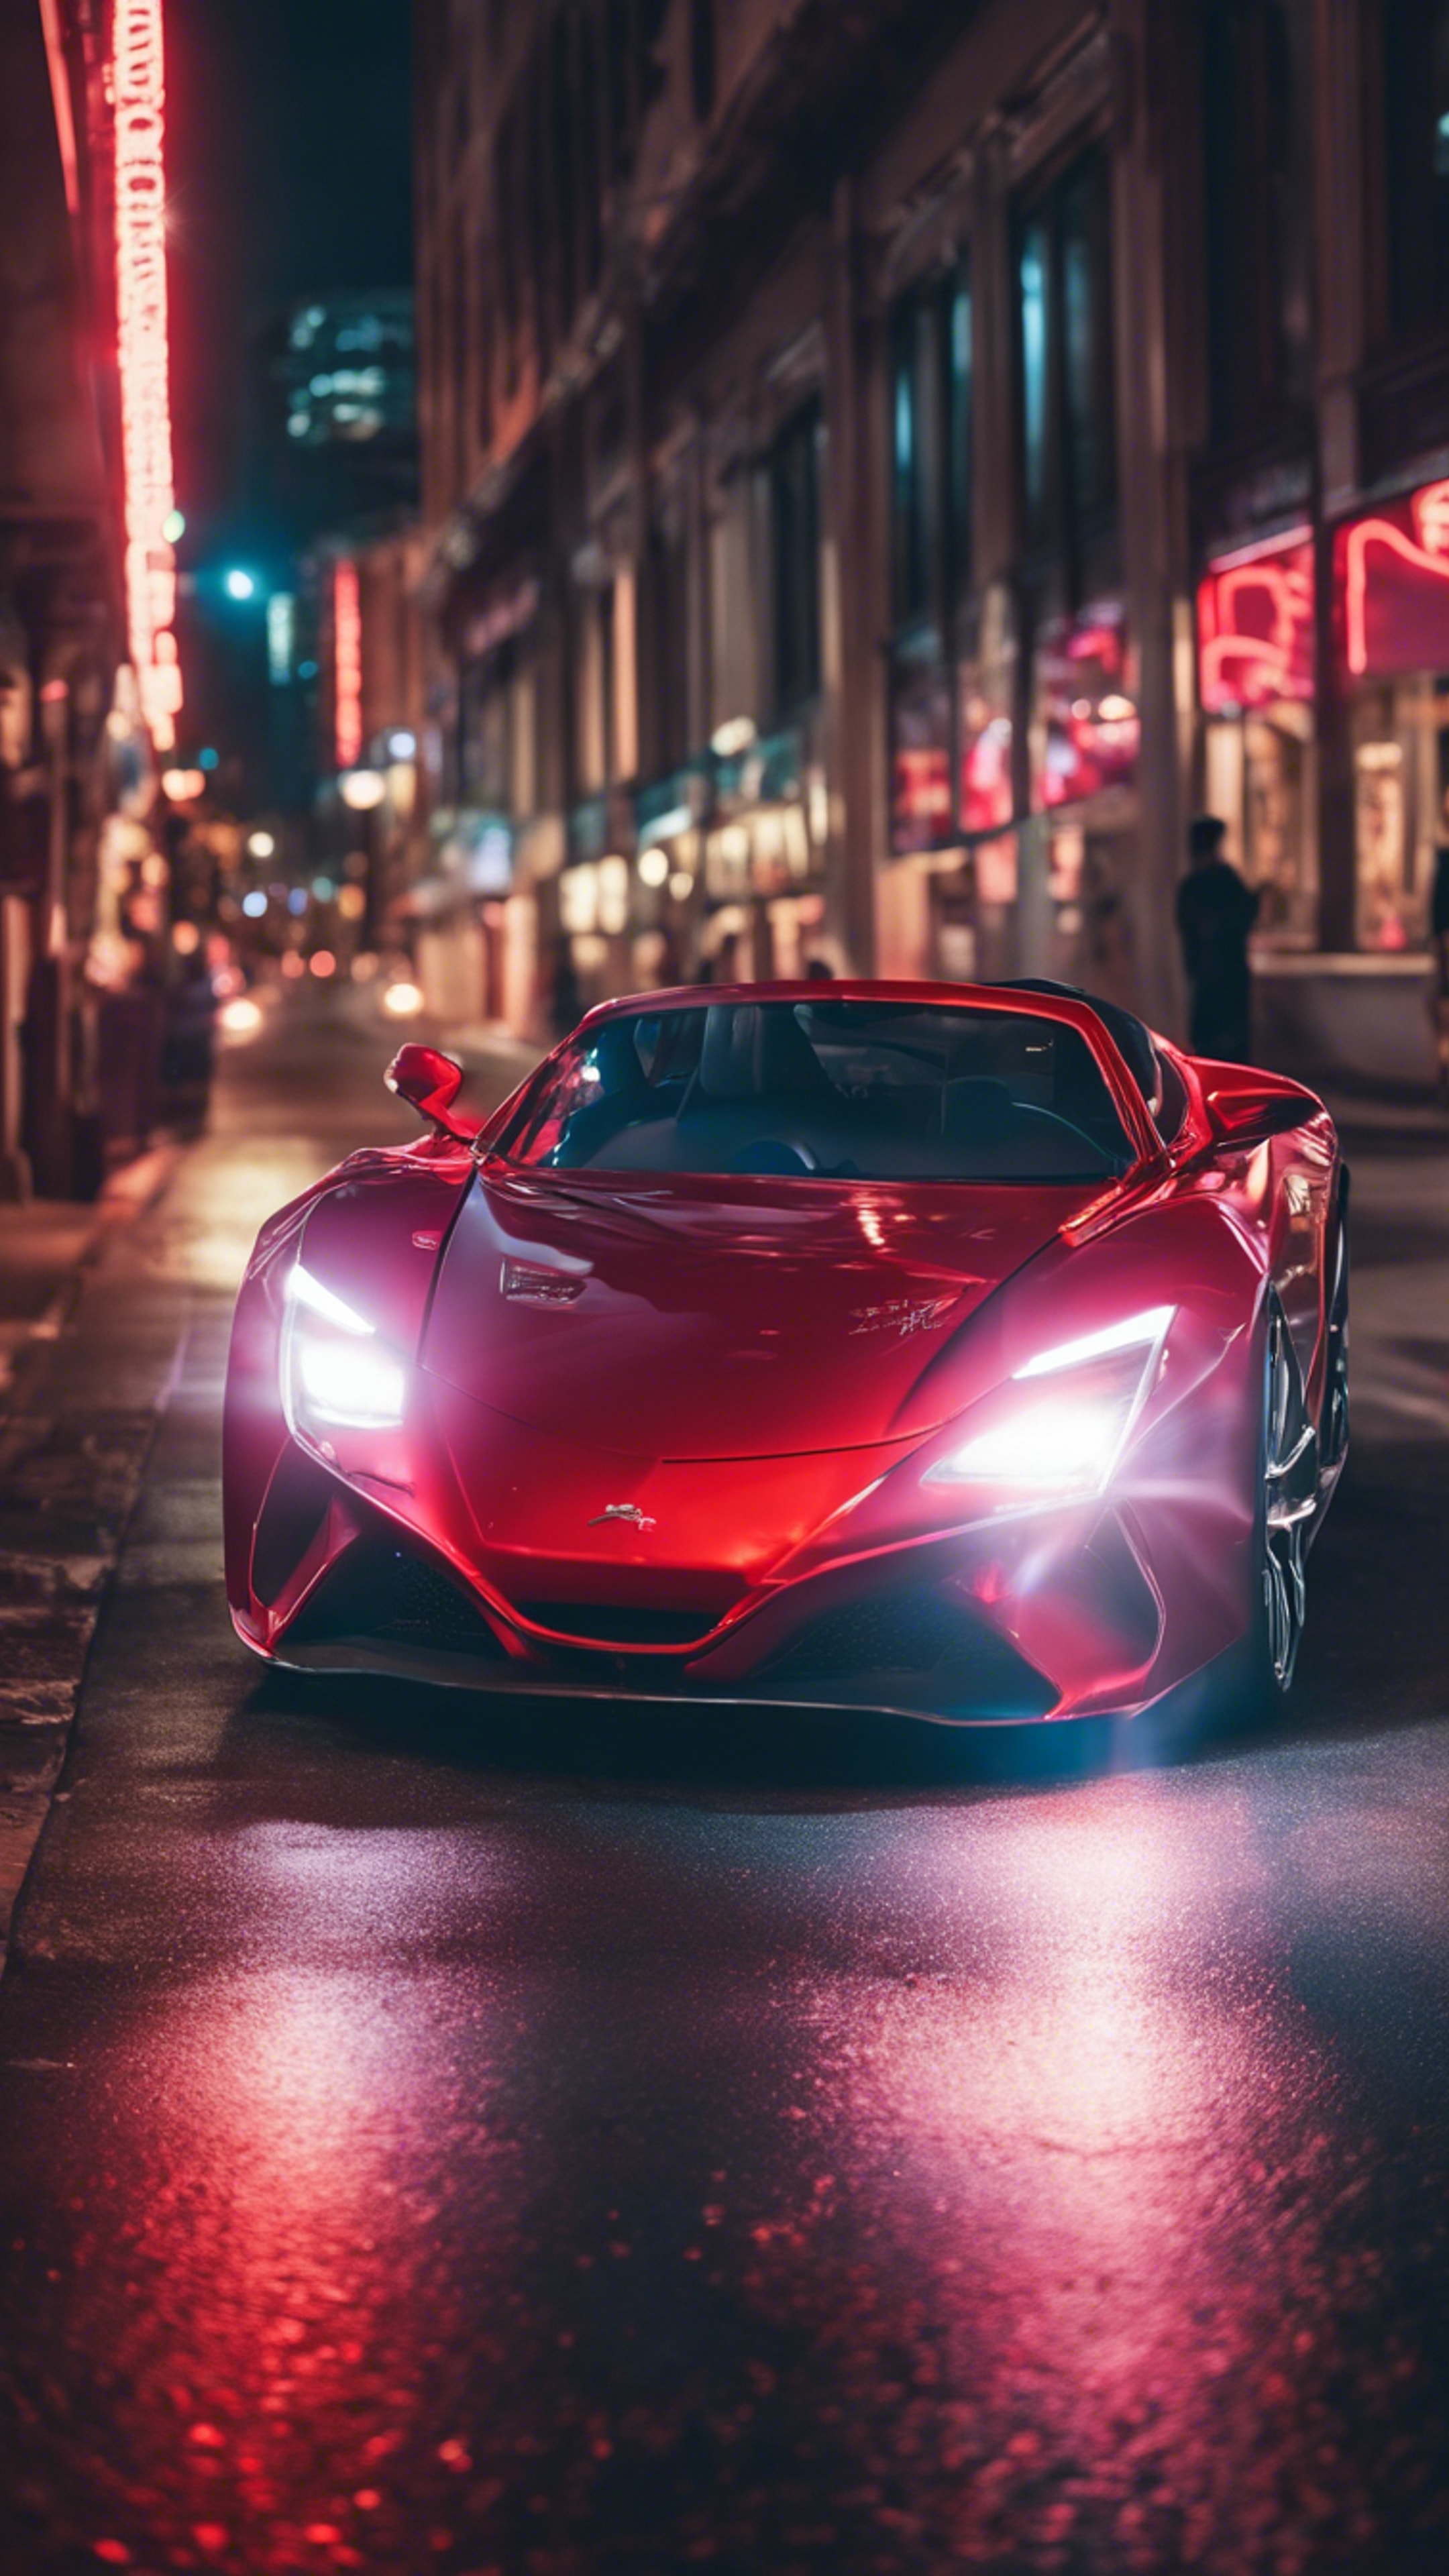 A sleek, cool red neon sports car zipping along a nighttime city street.壁紙[c8ae8bc93cf04b2eb441]